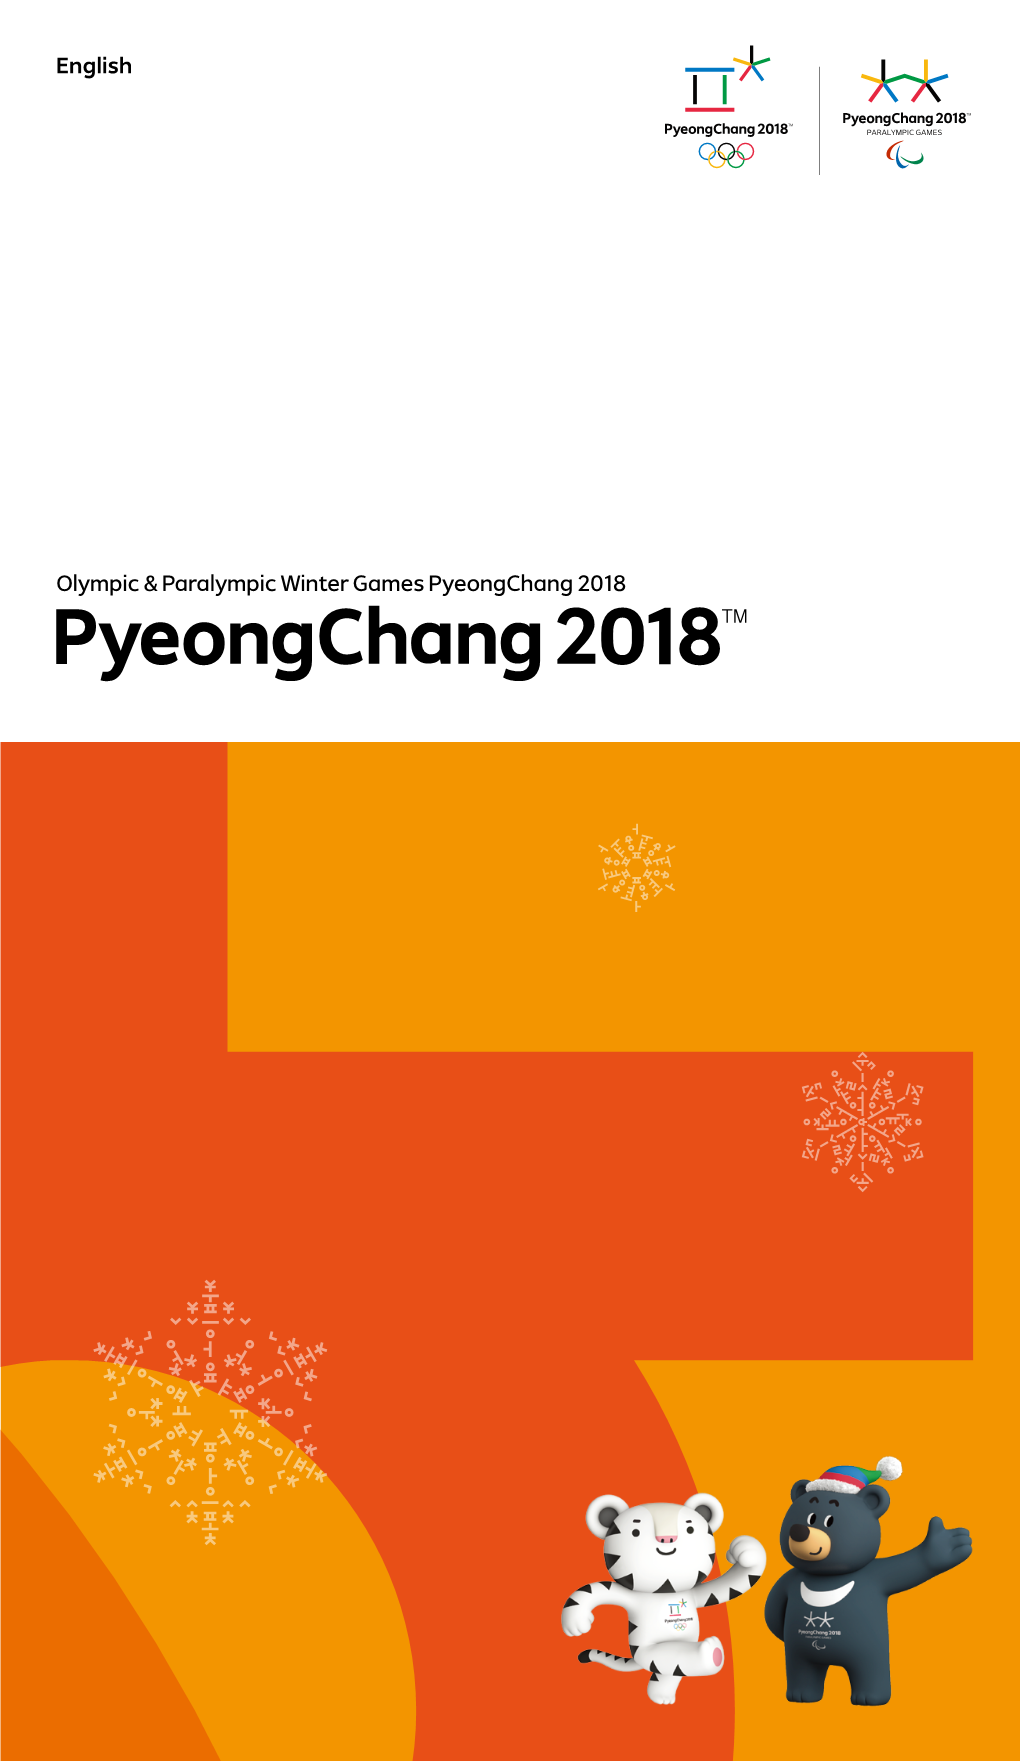 English Olympic & Paralympic Winter Games Pyeongchang 2018